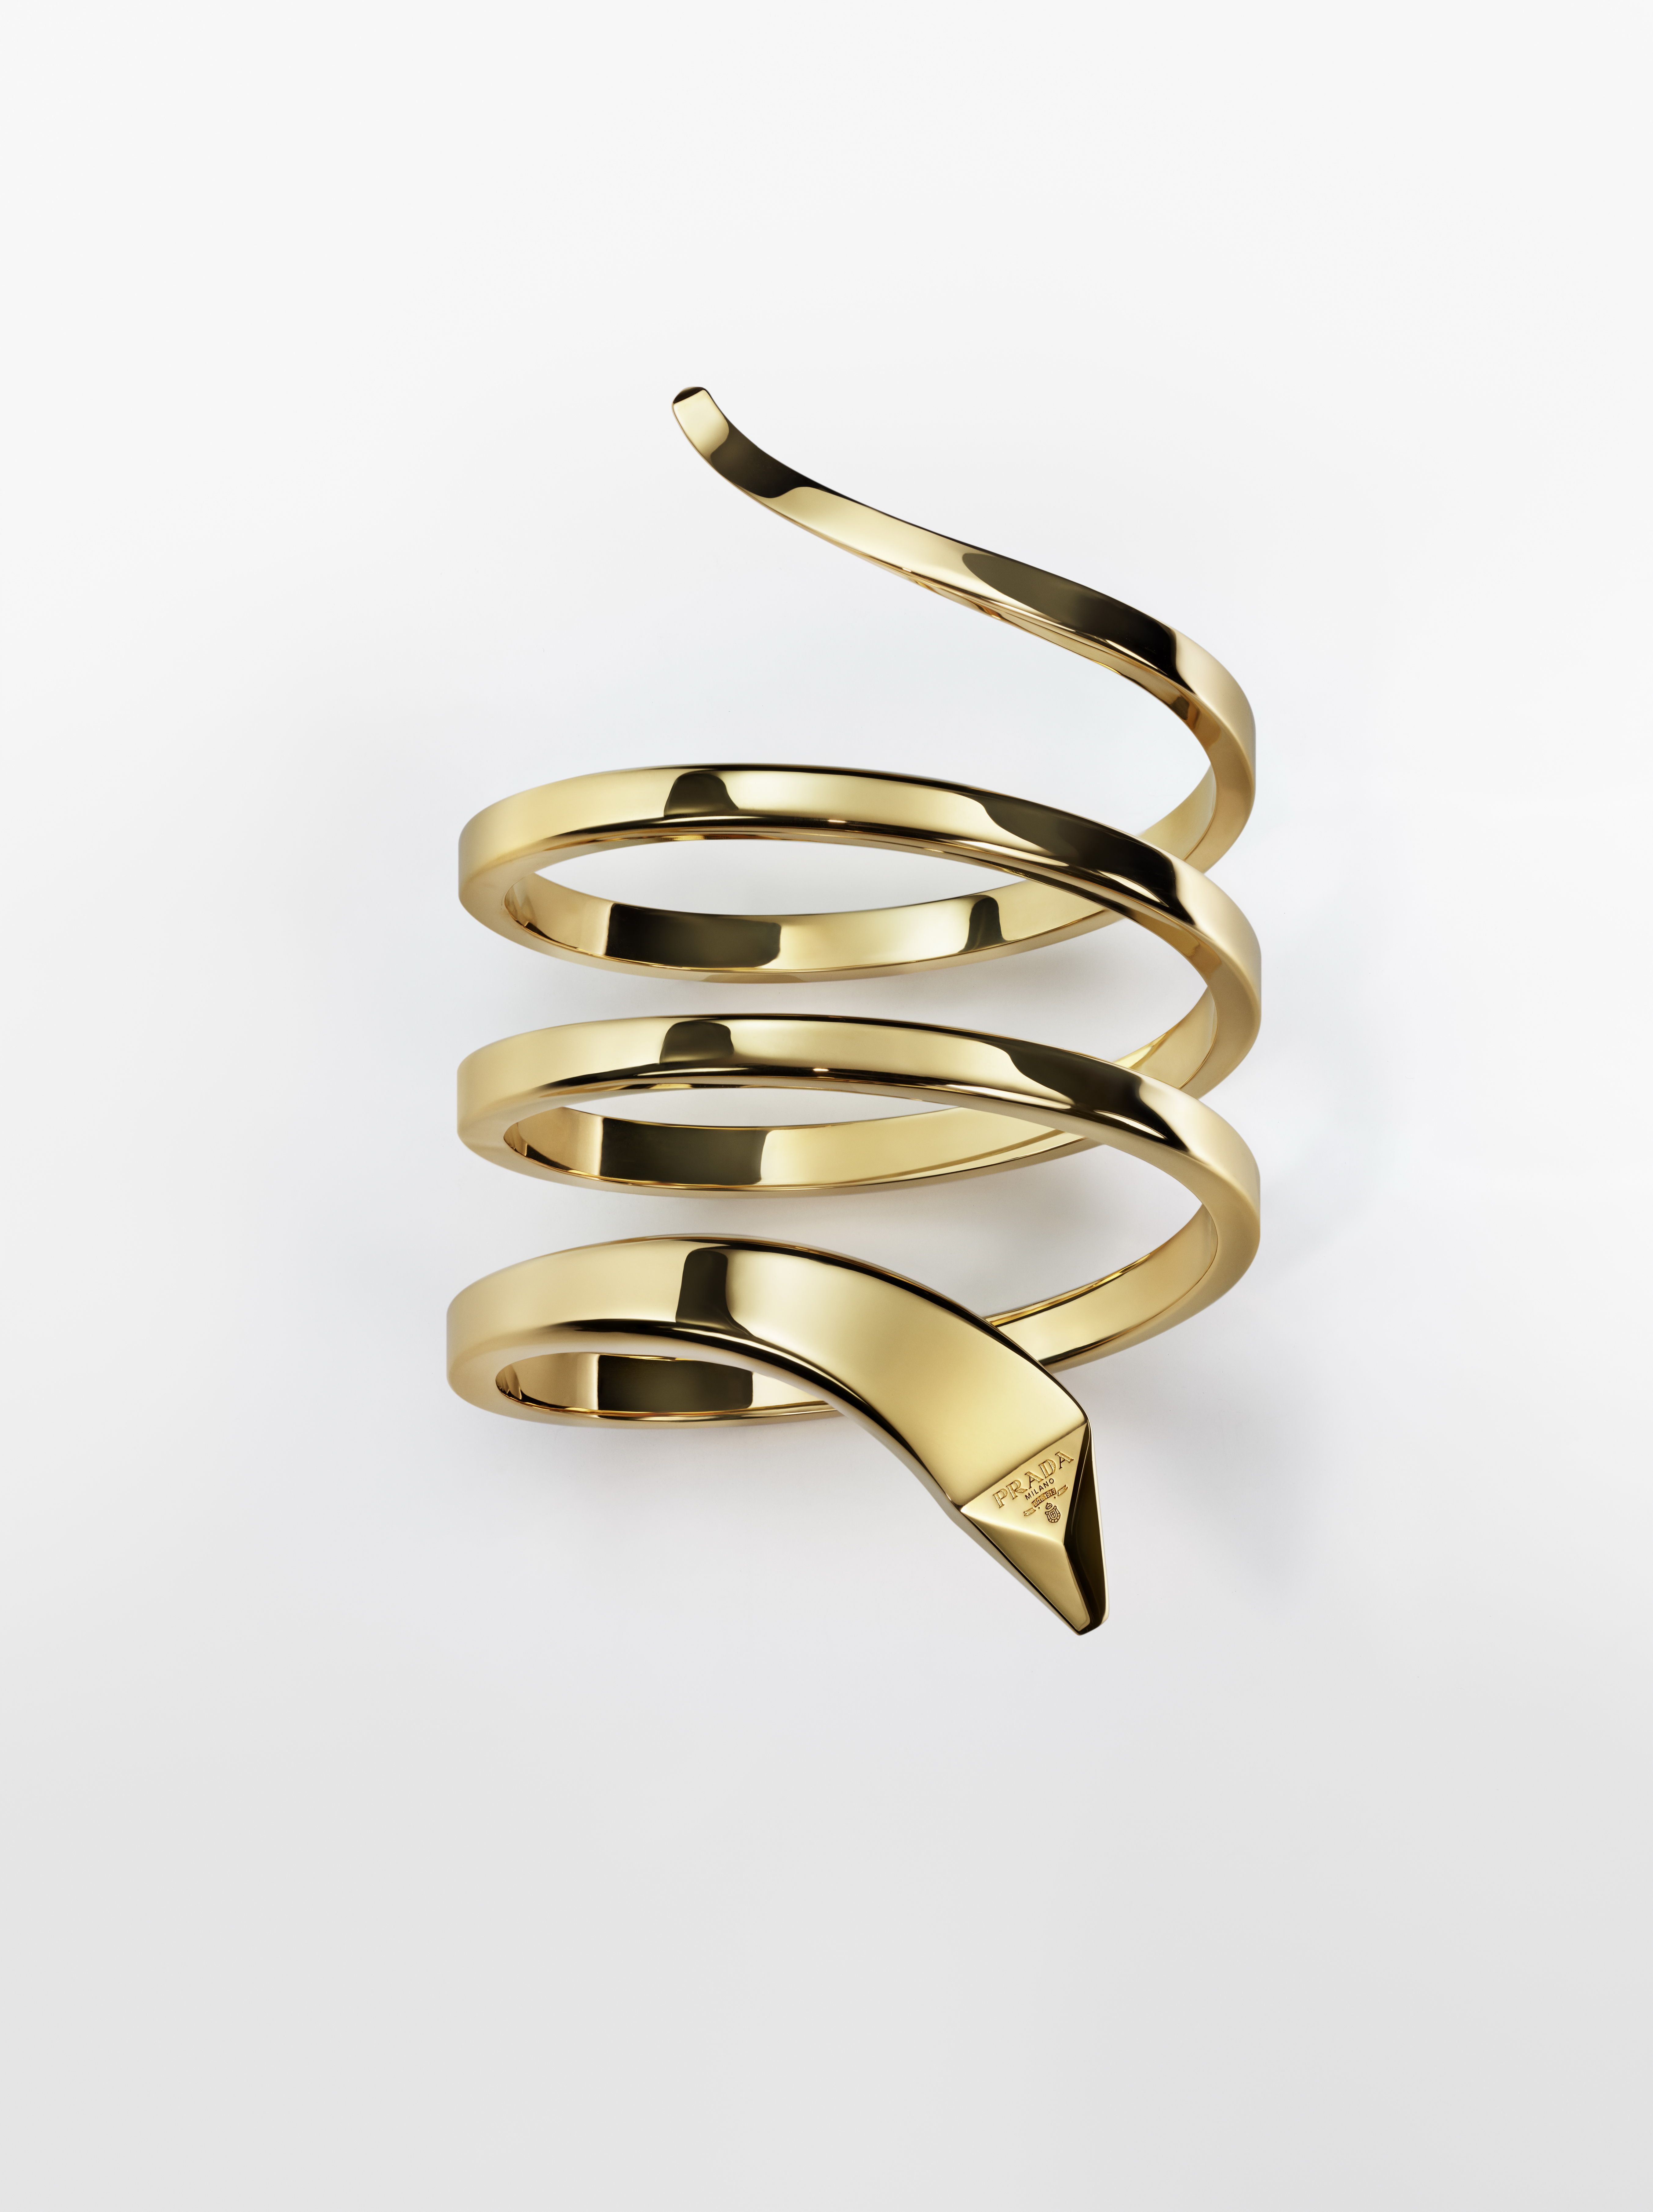 Prada unveils sustainable gold fine jewellery